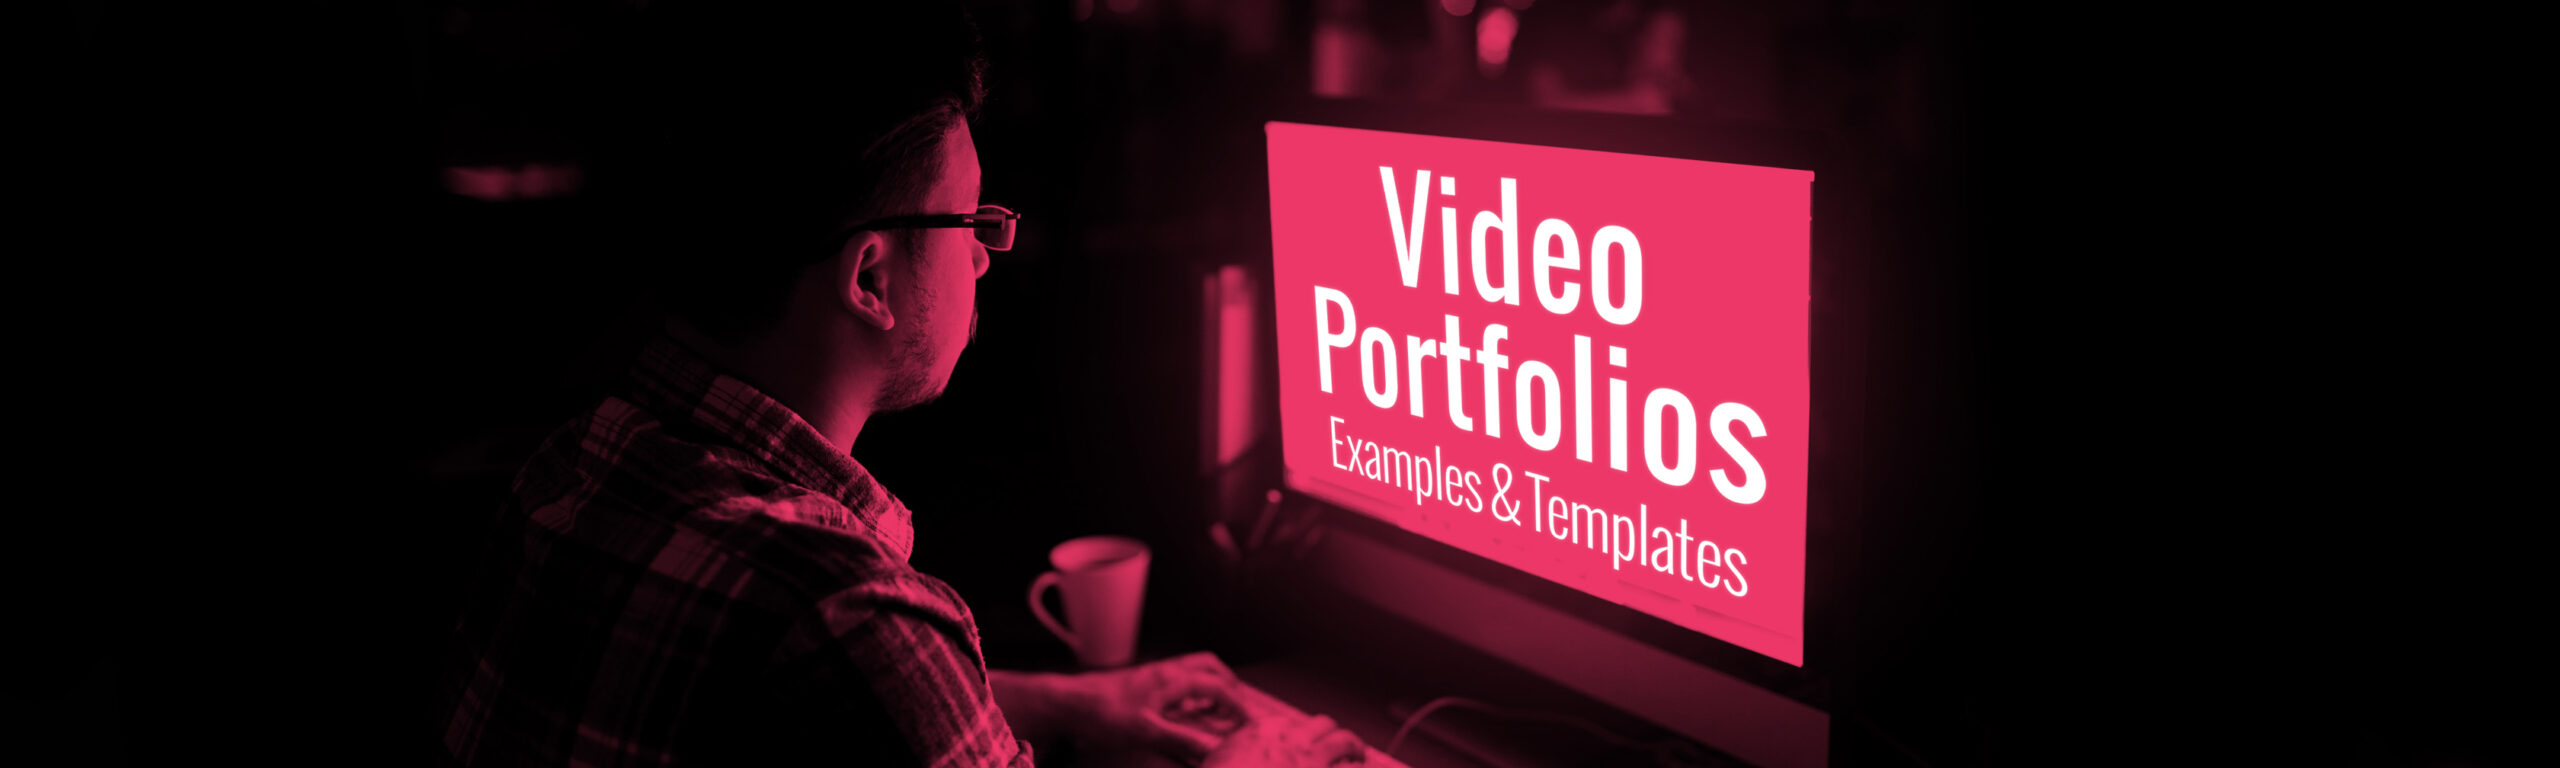 Video-Portfolios-Examples-and-Templates-BG2